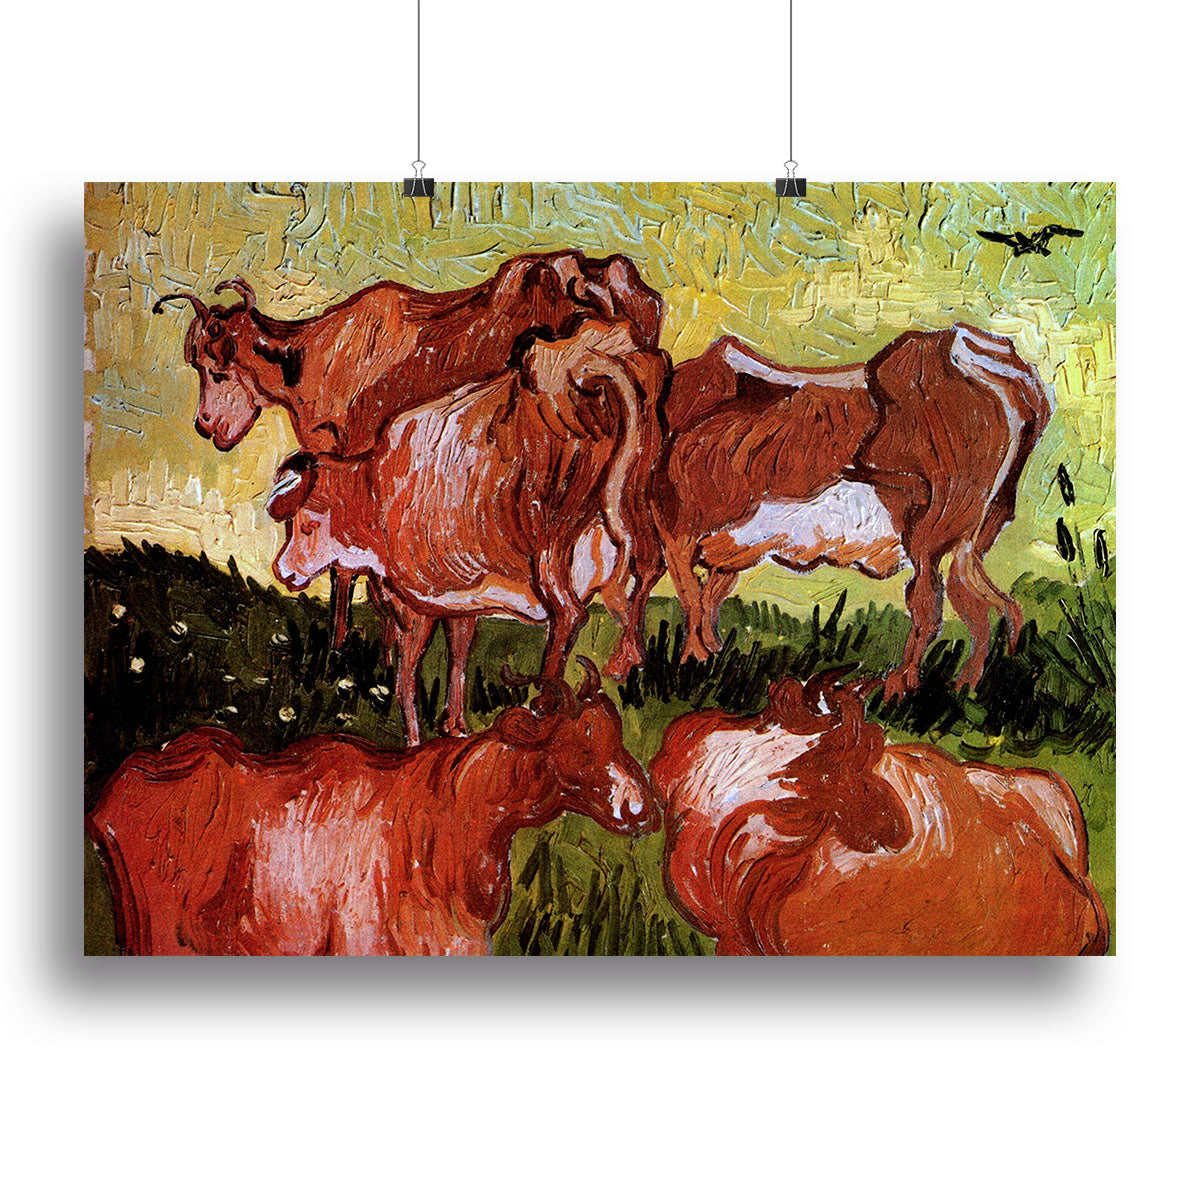 Cows after Jordaens by Van Gogh Canvas Print or Poster - Canvas Art Rocks - 2